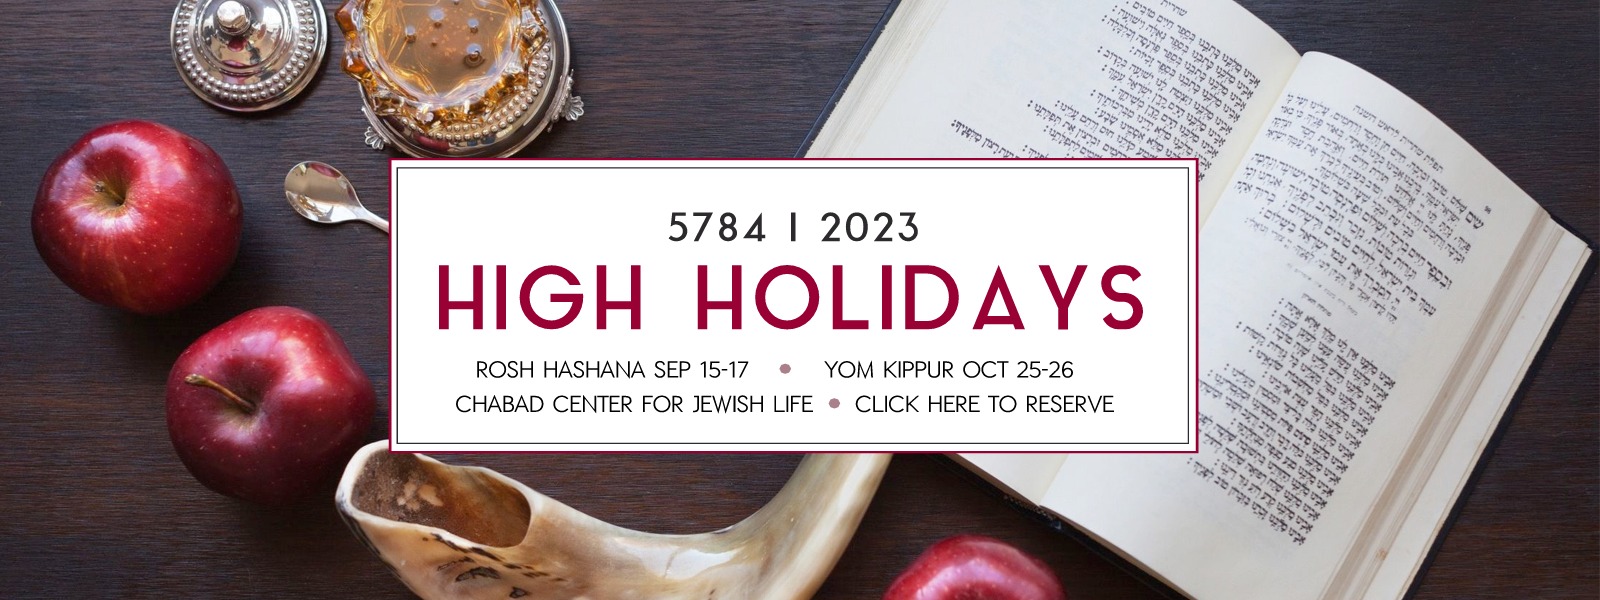 High Holidays Buffalo Chabad Center For Jewish Life